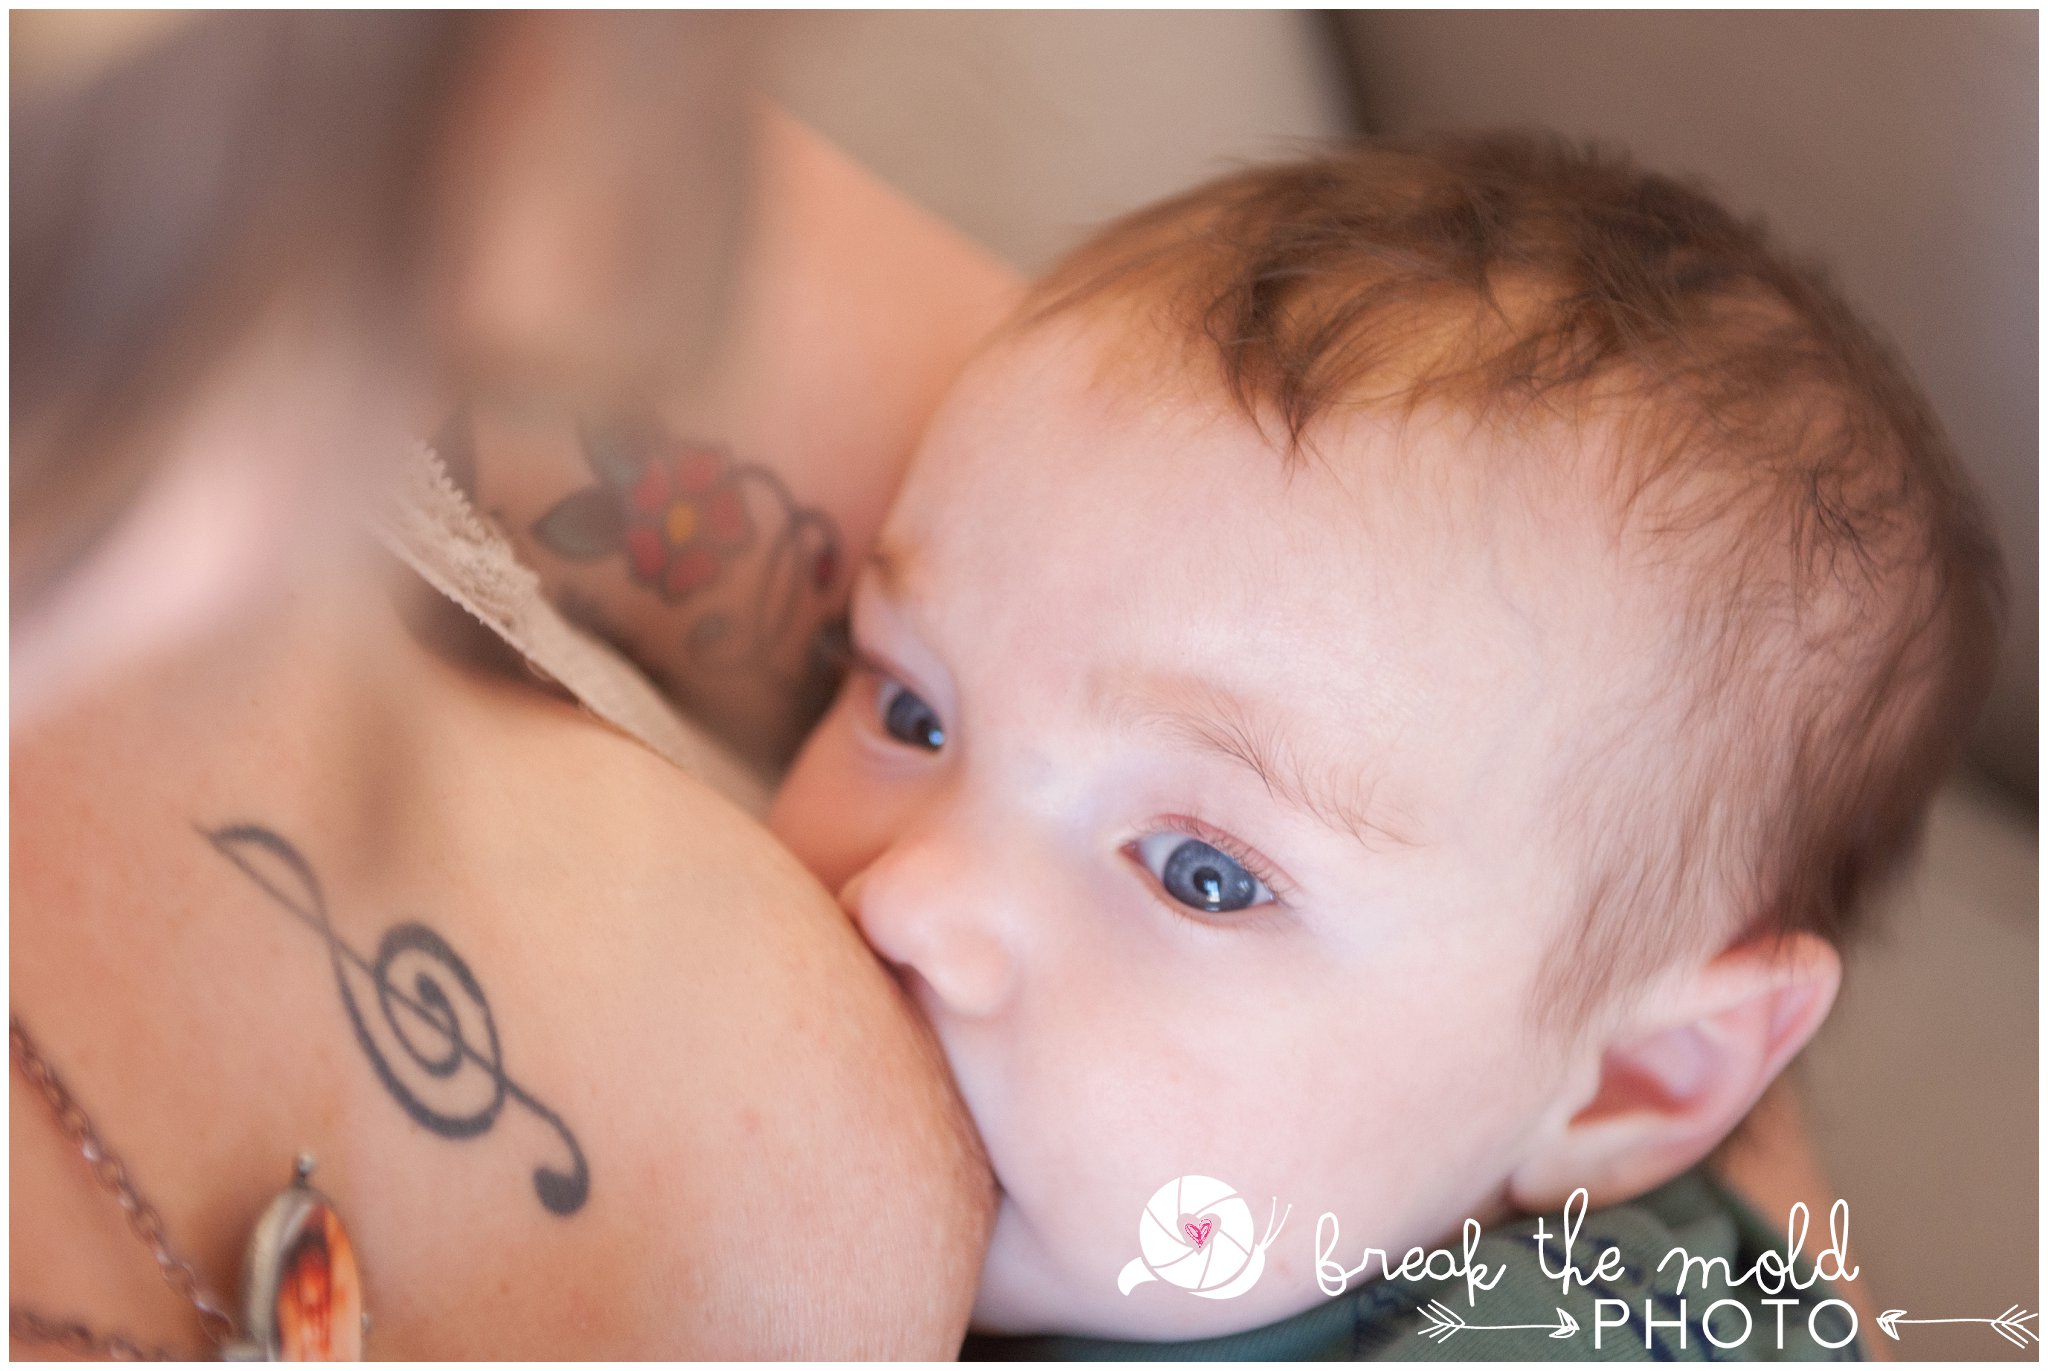 break-the-mold-photo-nursing-body-love-baby-pregnant-women-powerful-breastfeeding-sessions_7228.jpg